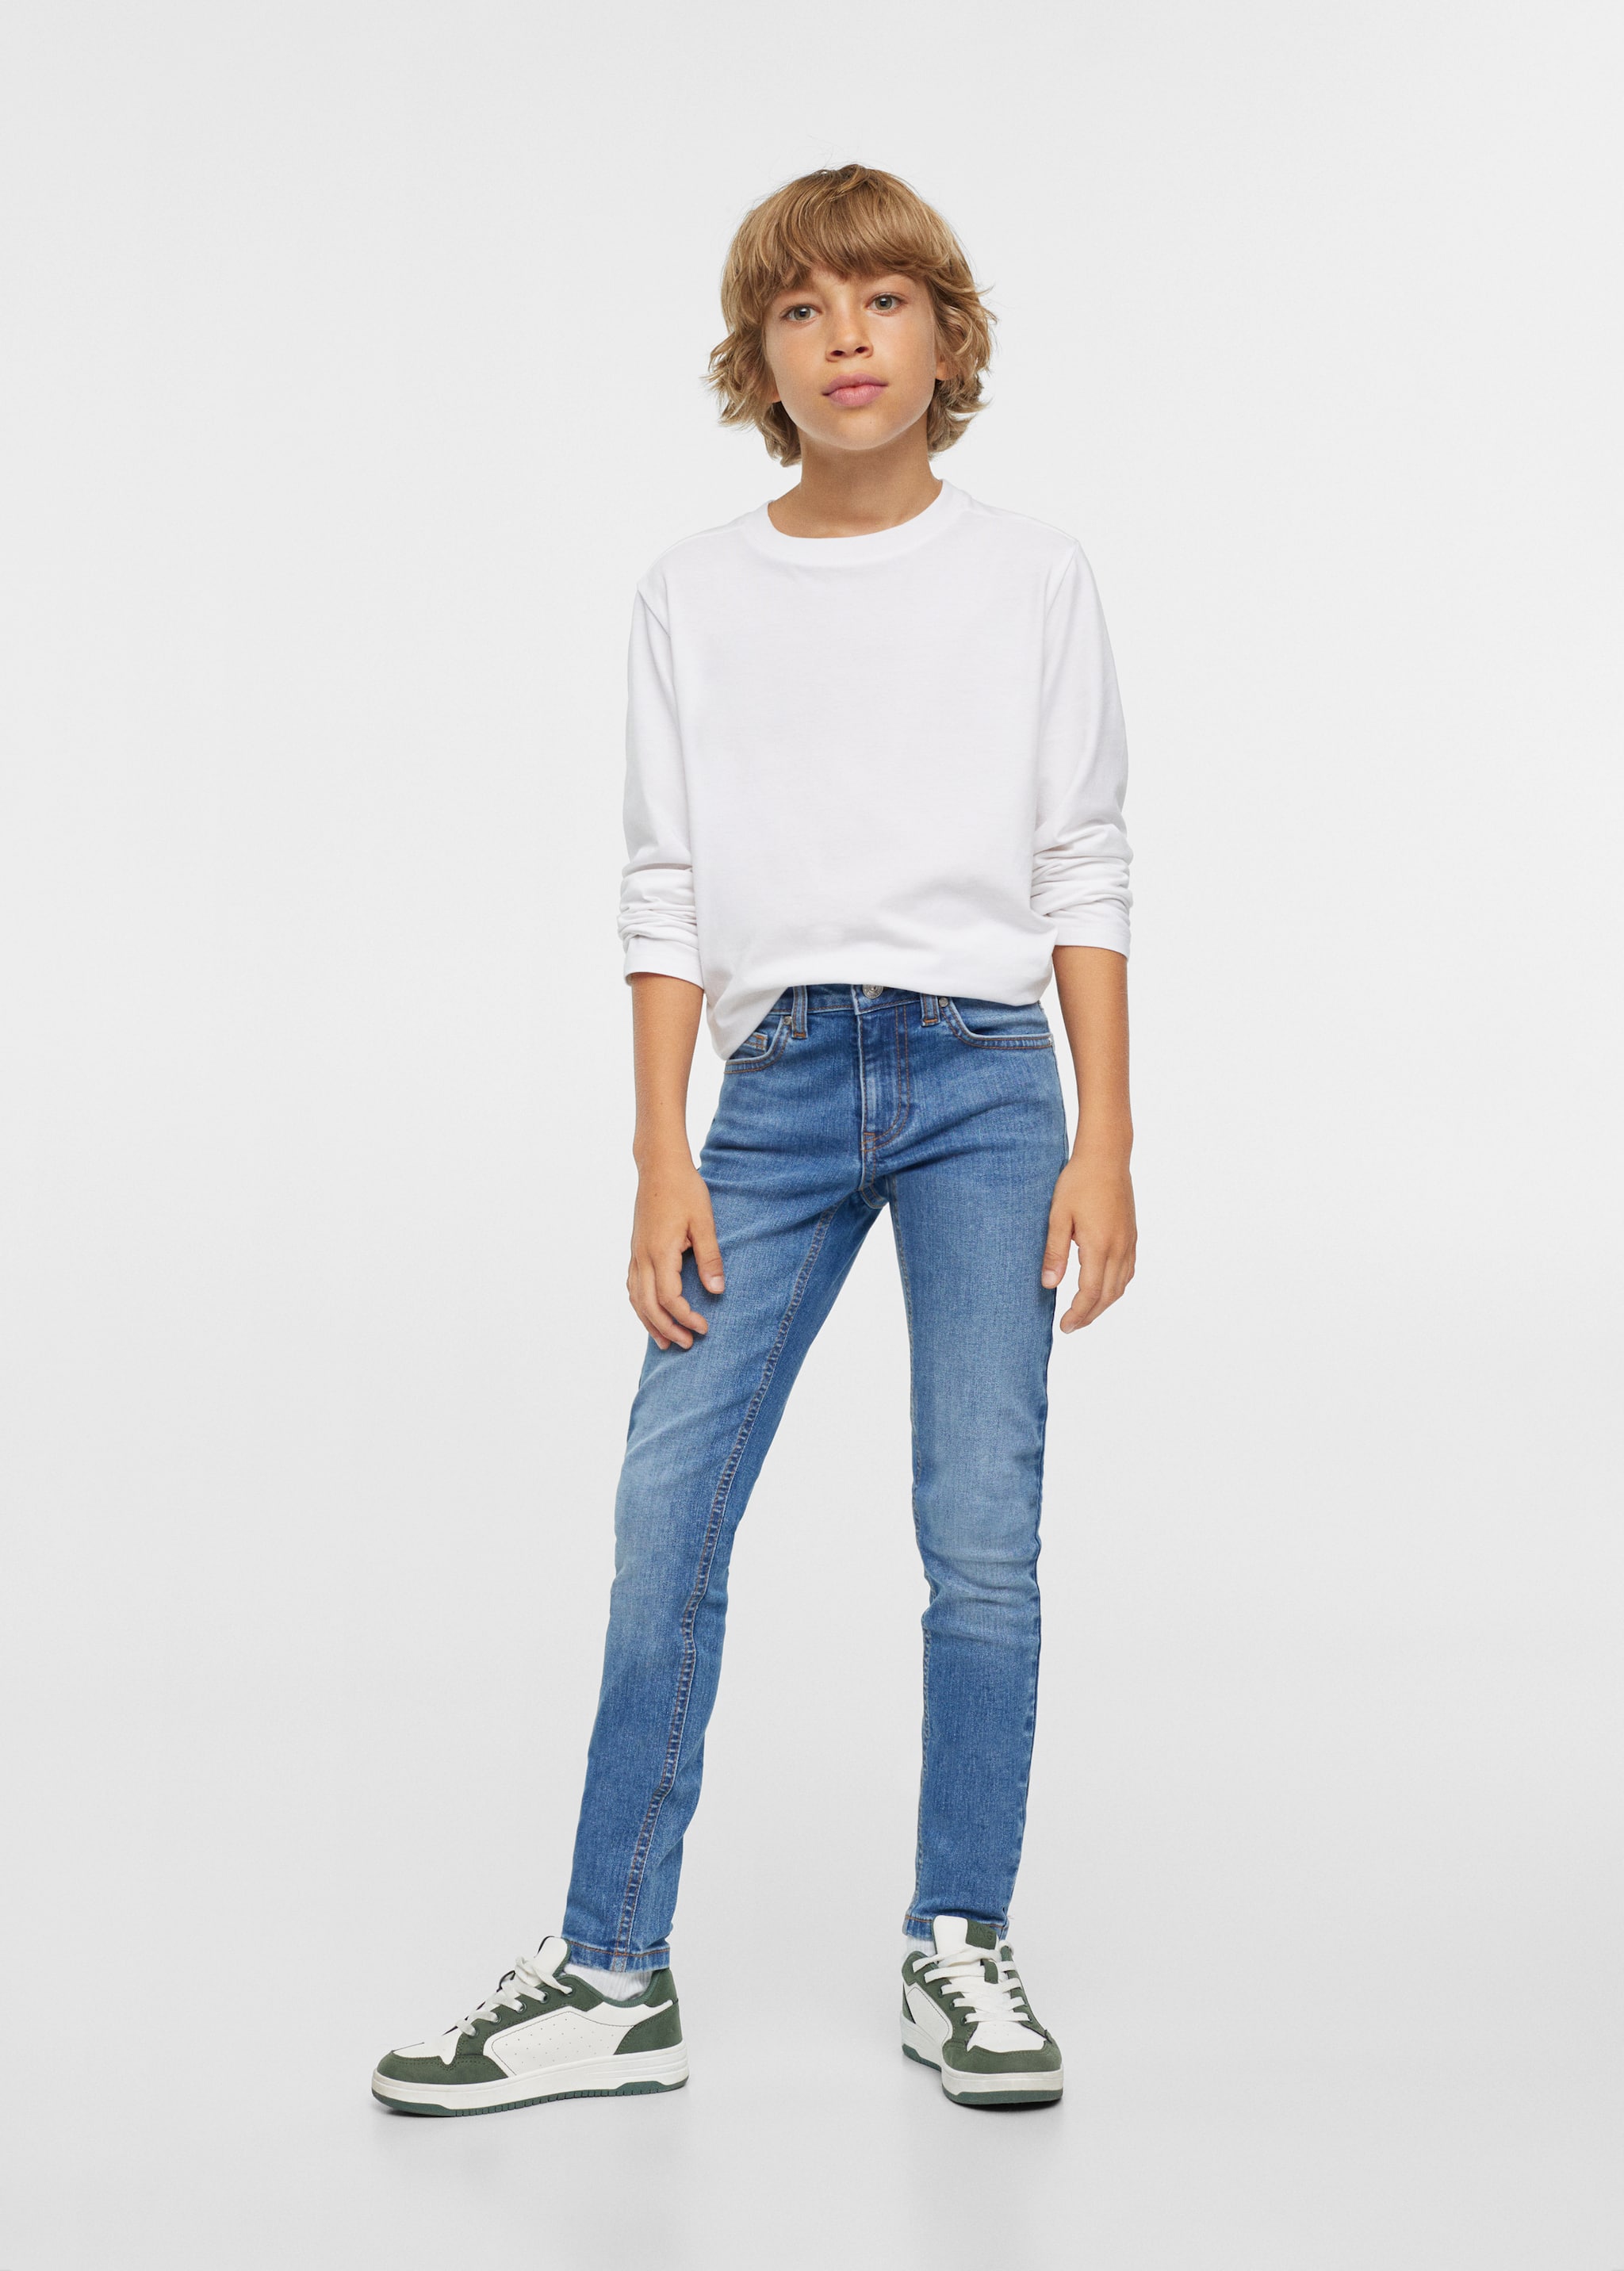 Skinny jeans - Medium plane